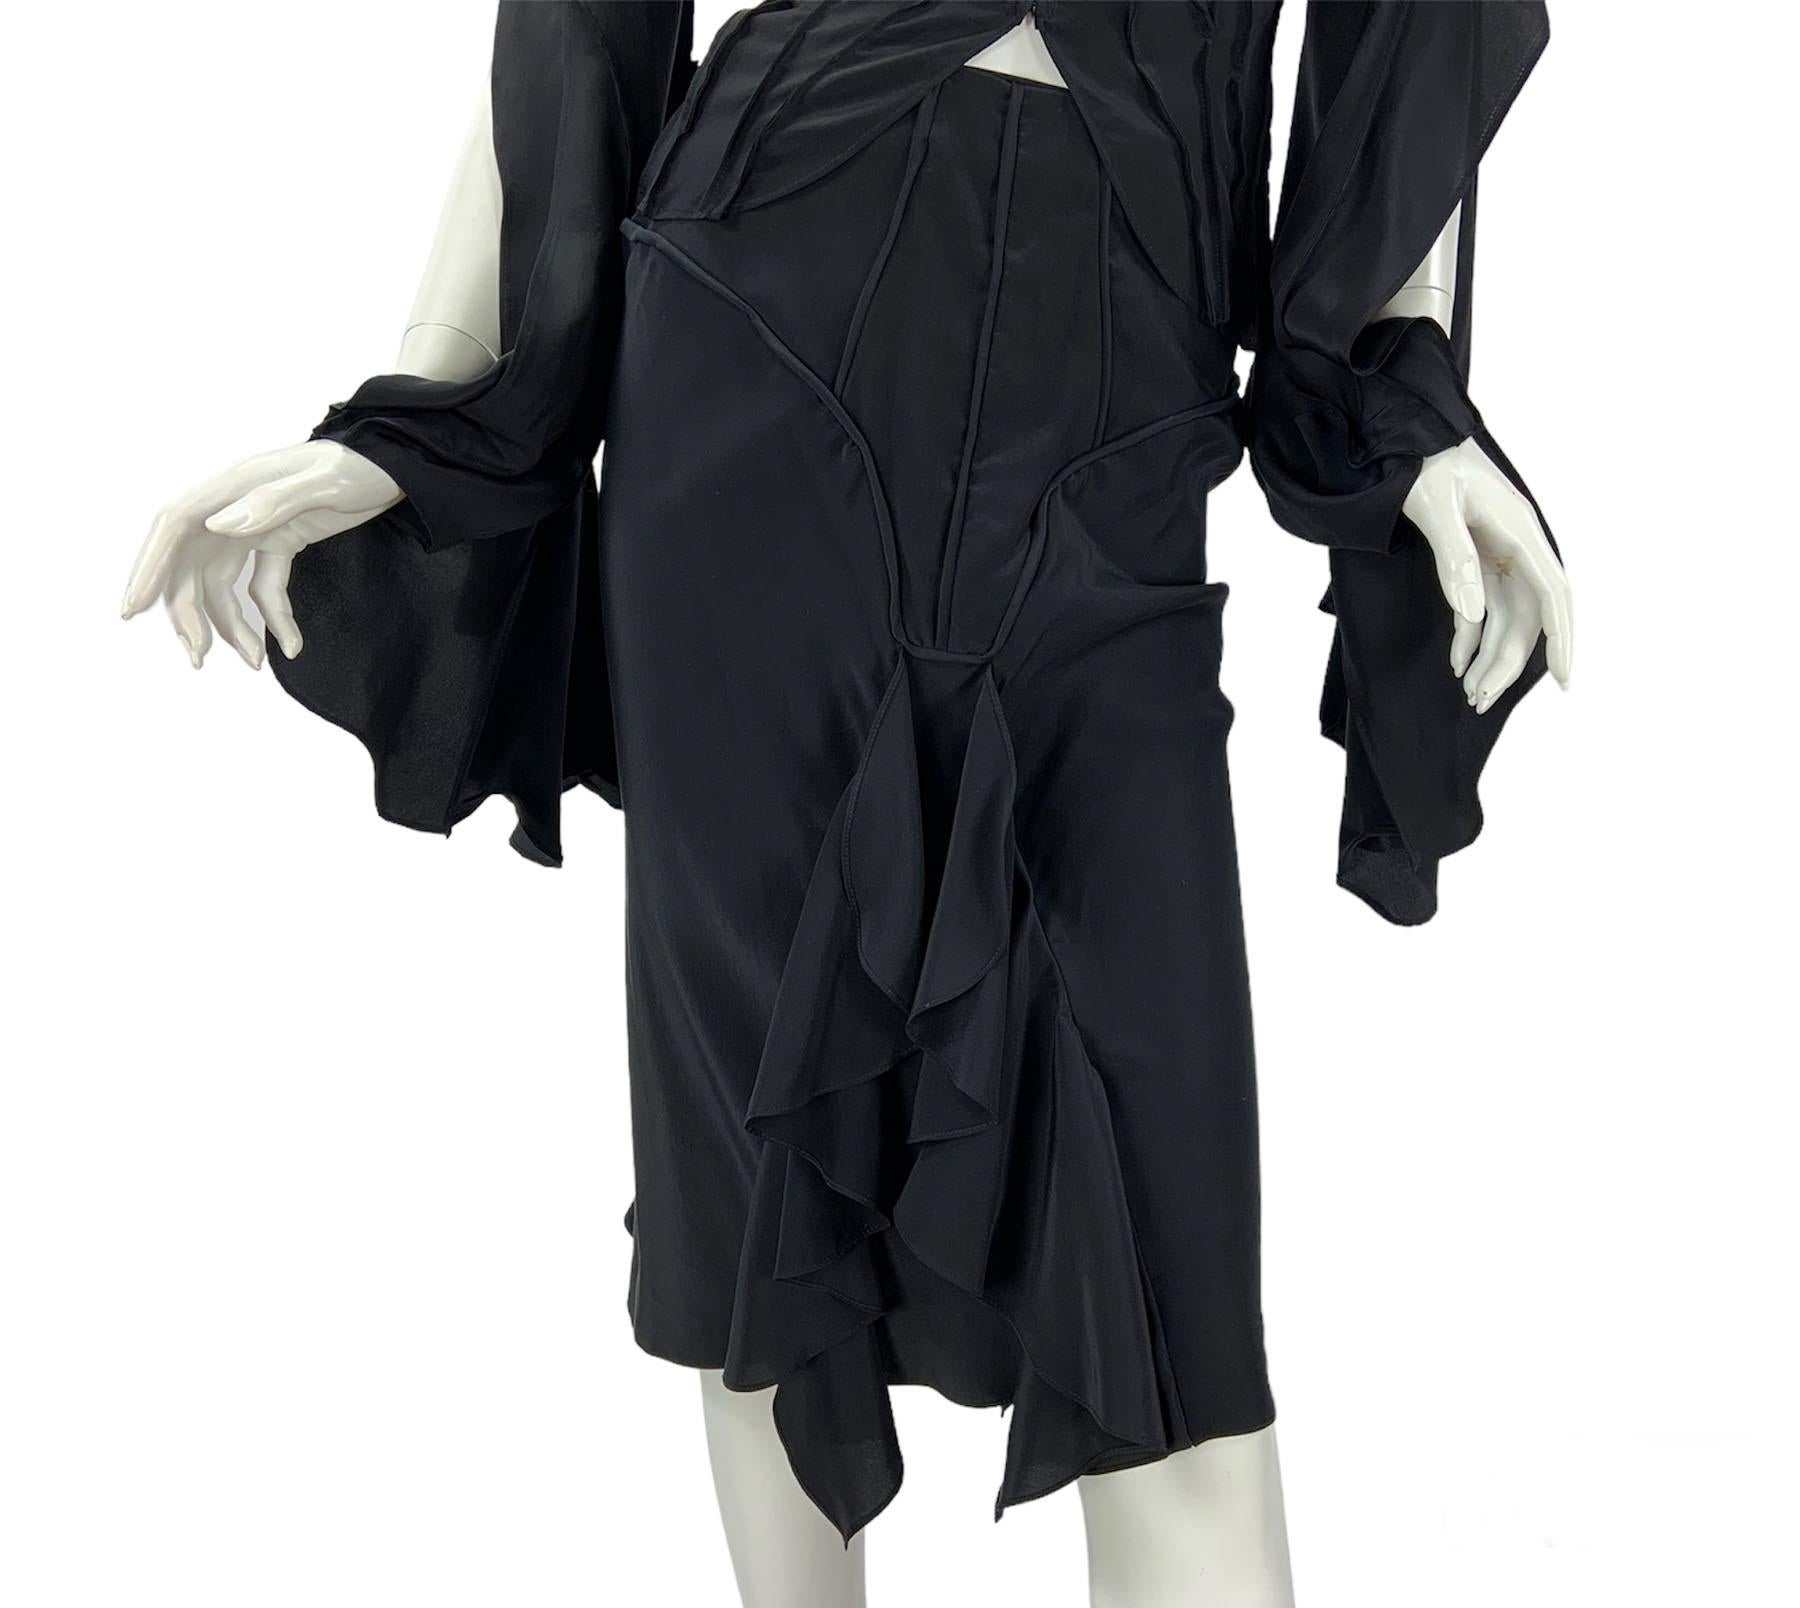 Tom Ford for Yves Saint Laurent S/S 2003 Silk Black Skirt Suit French 38 - US 6 For Sale 6